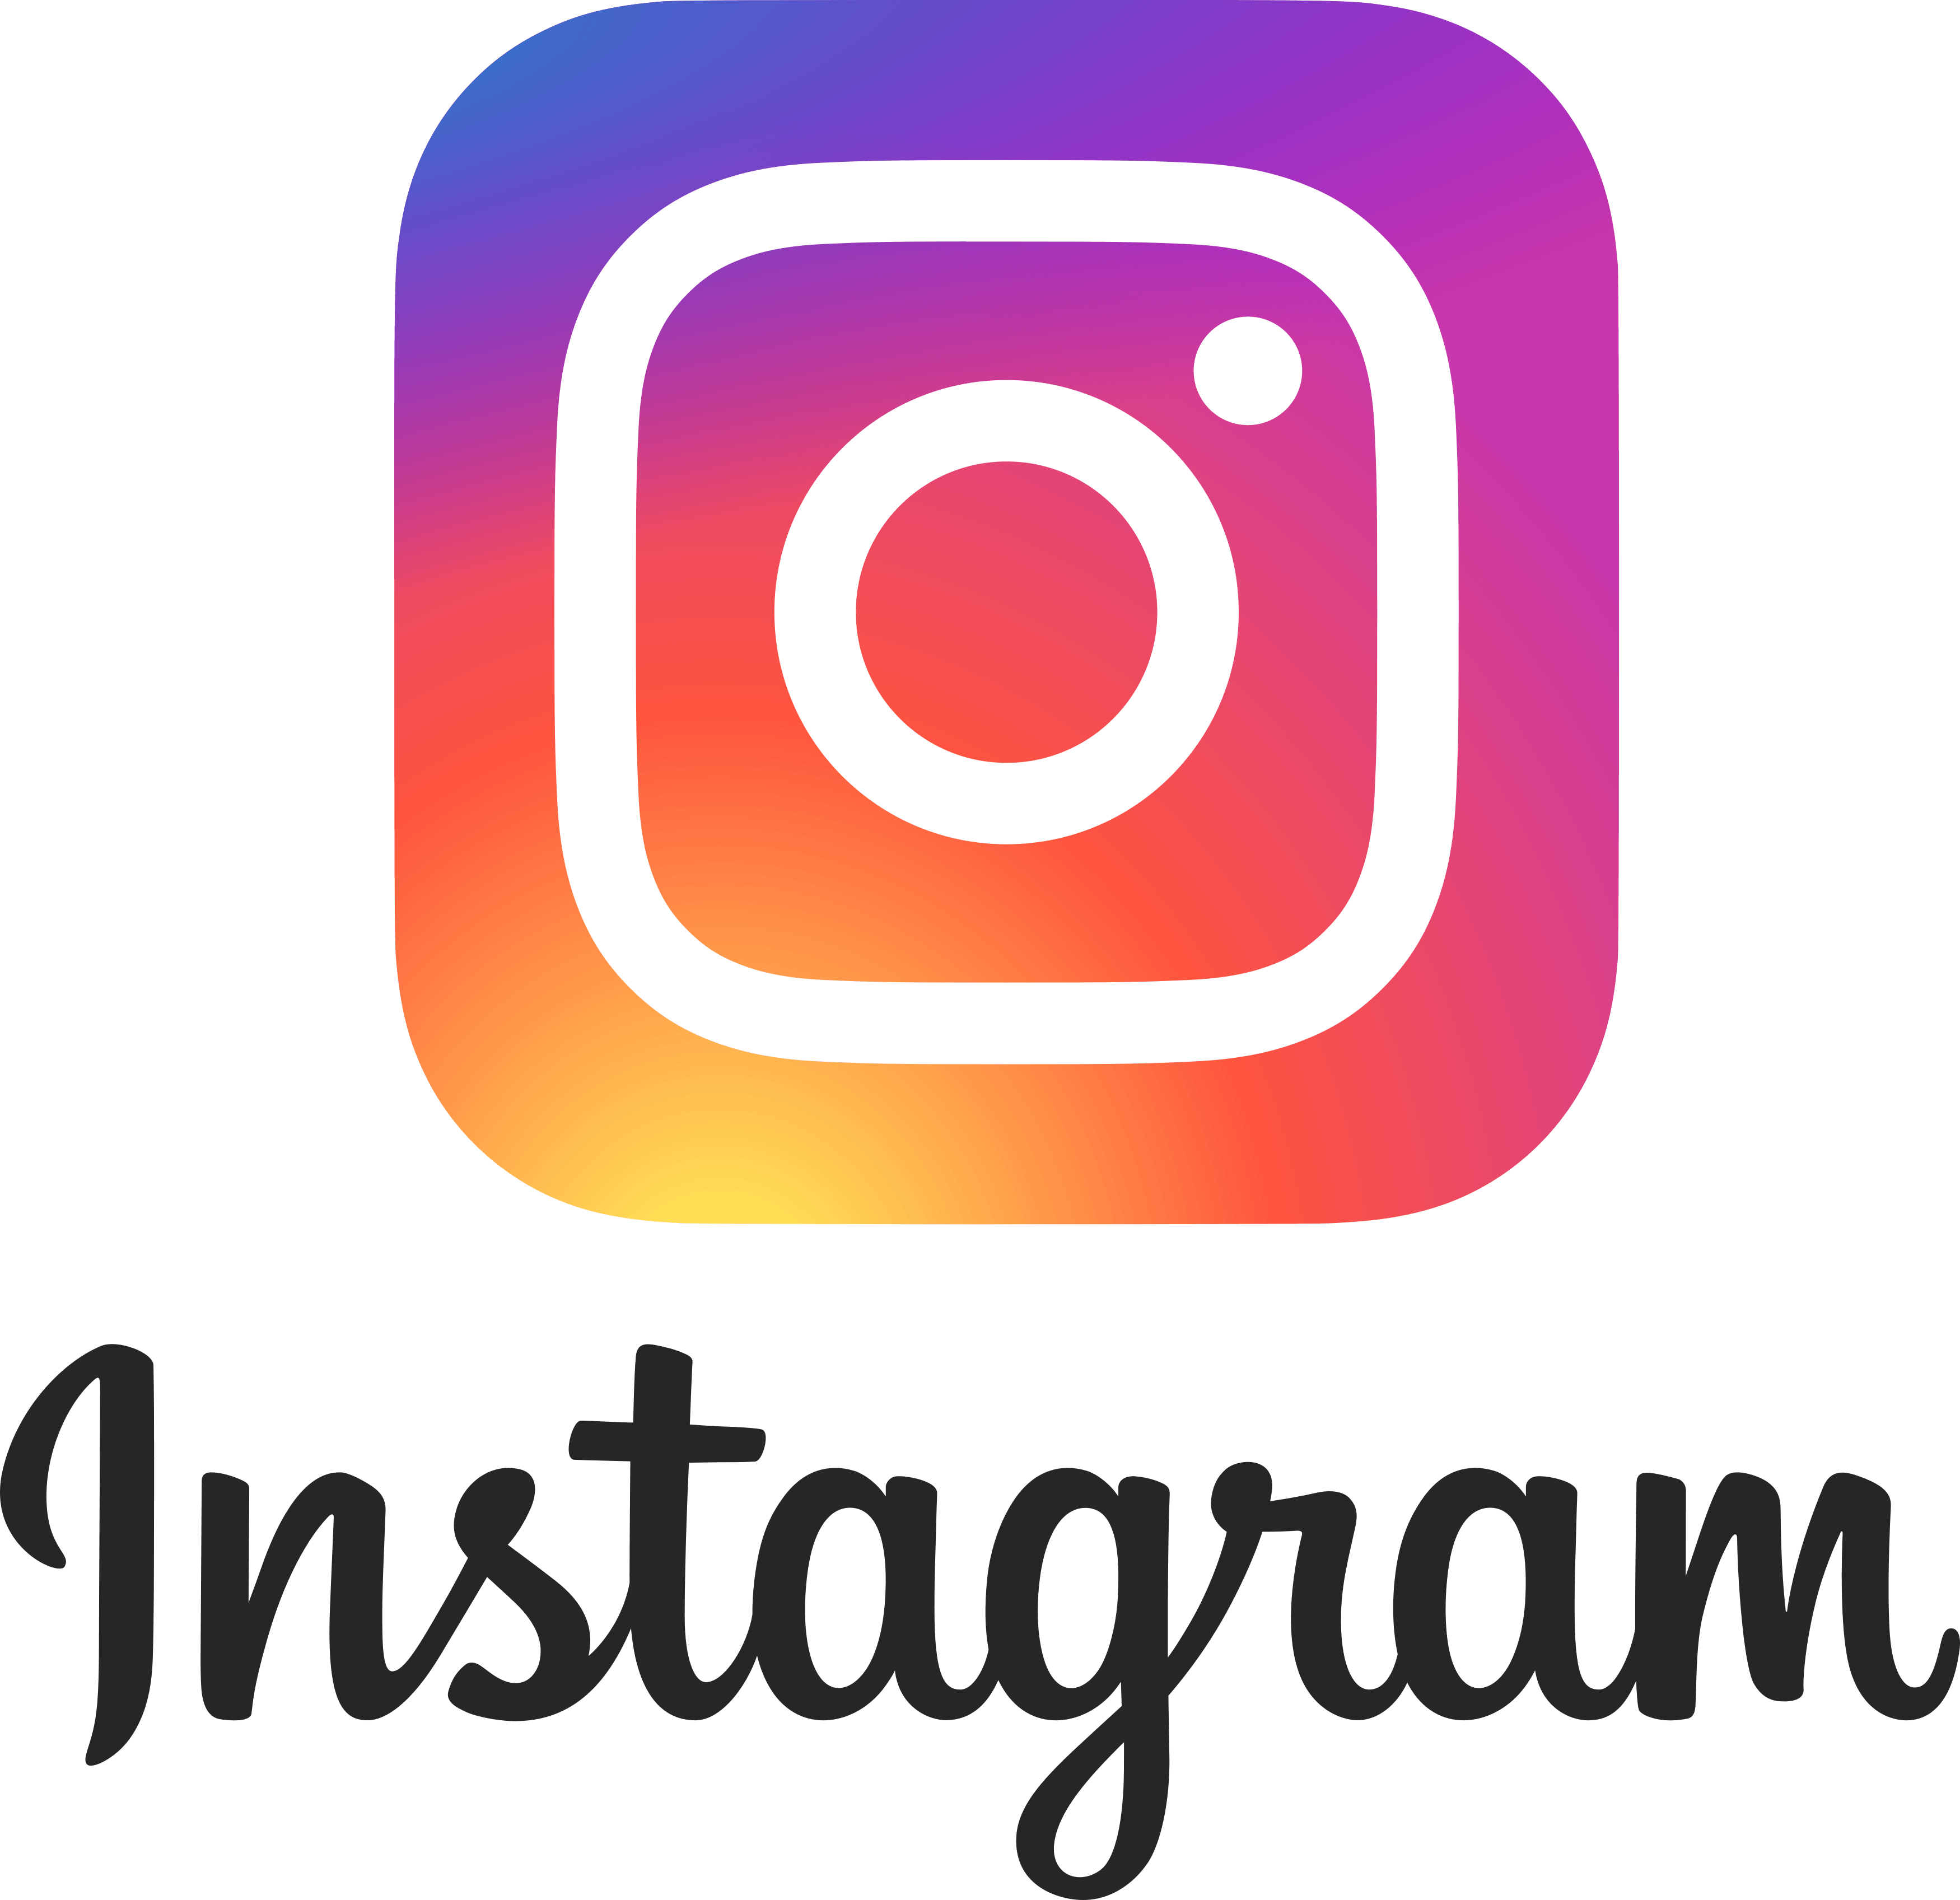 Big Instagram Logo - Instagram Tech Support 1855 441 4470. Instagram Customer Service Number